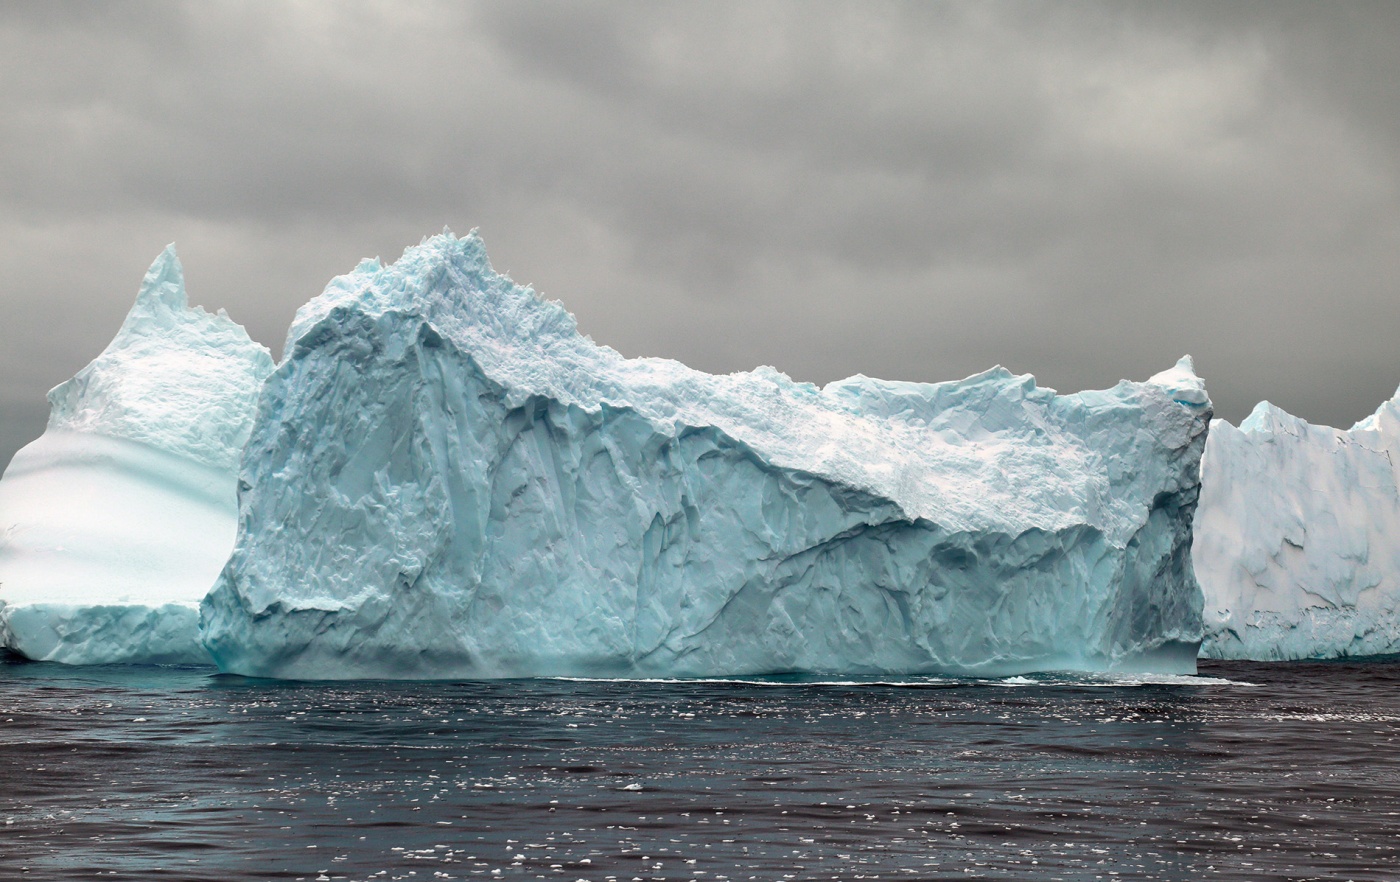 Image of an ice glacier in Antarctica